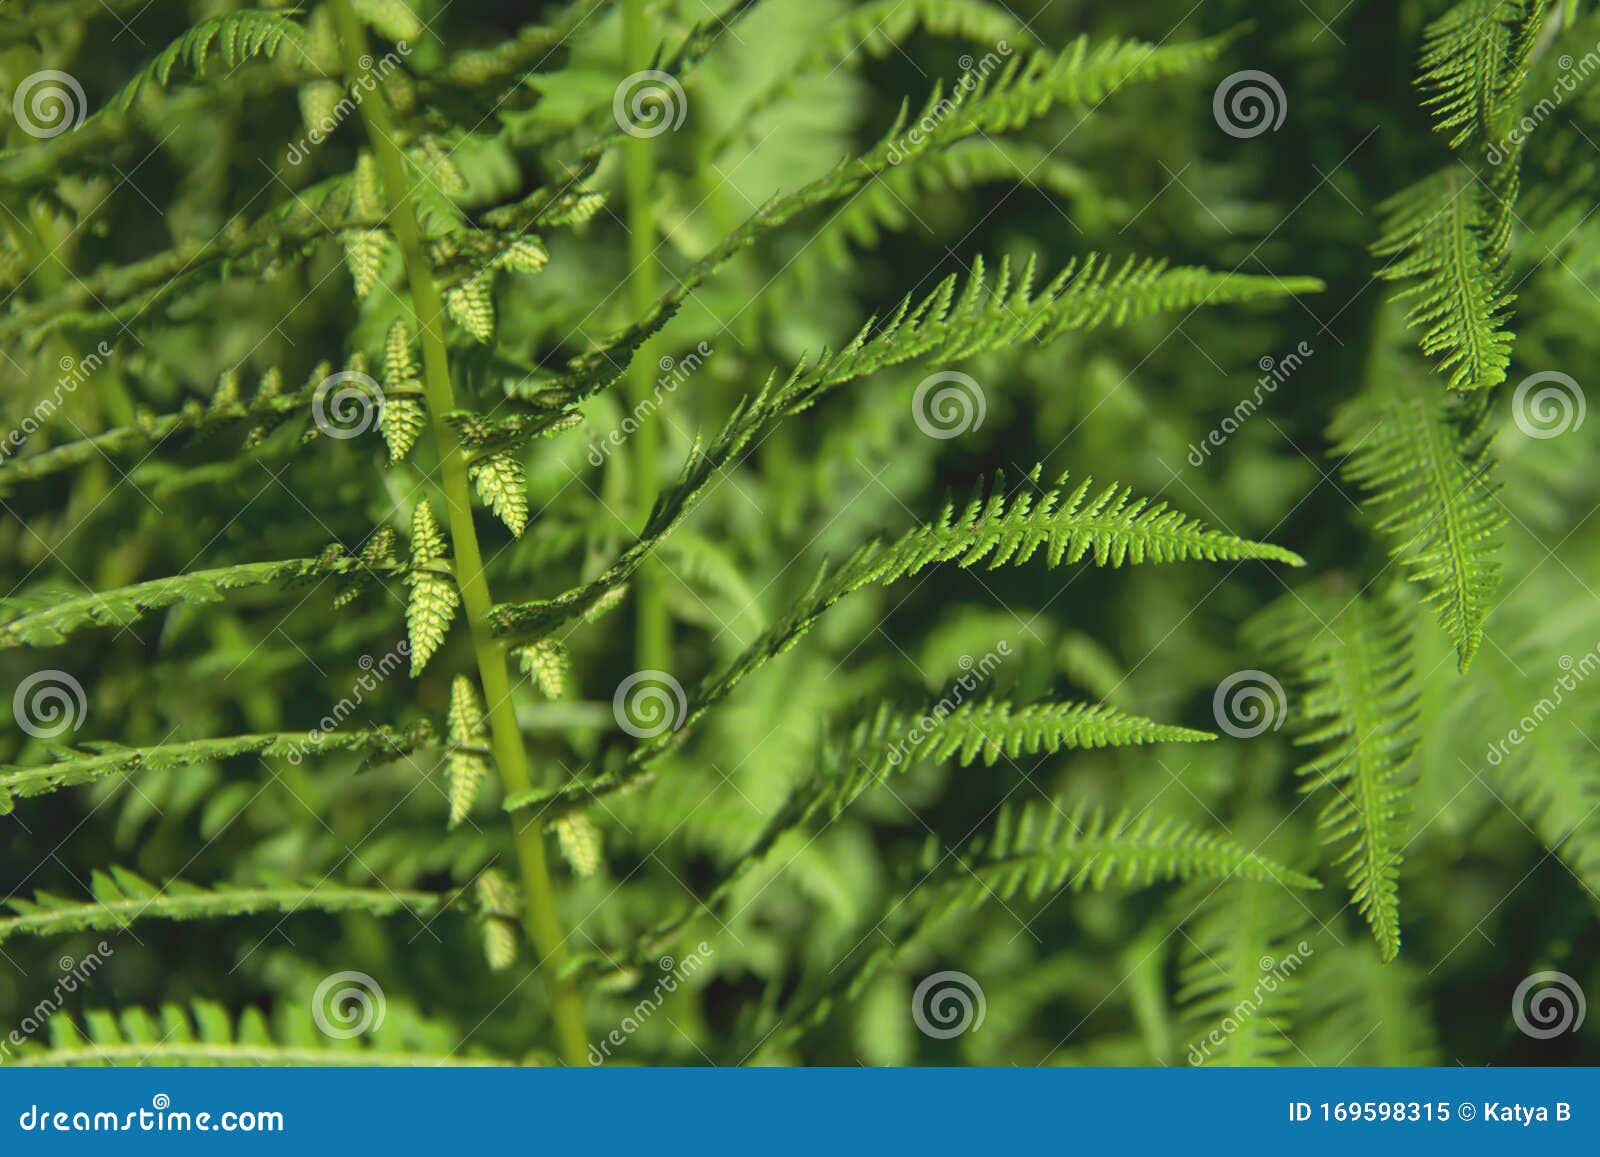 athyrium filix-femina or common lady-fern close-up. young fresh leaves of fern. nature background